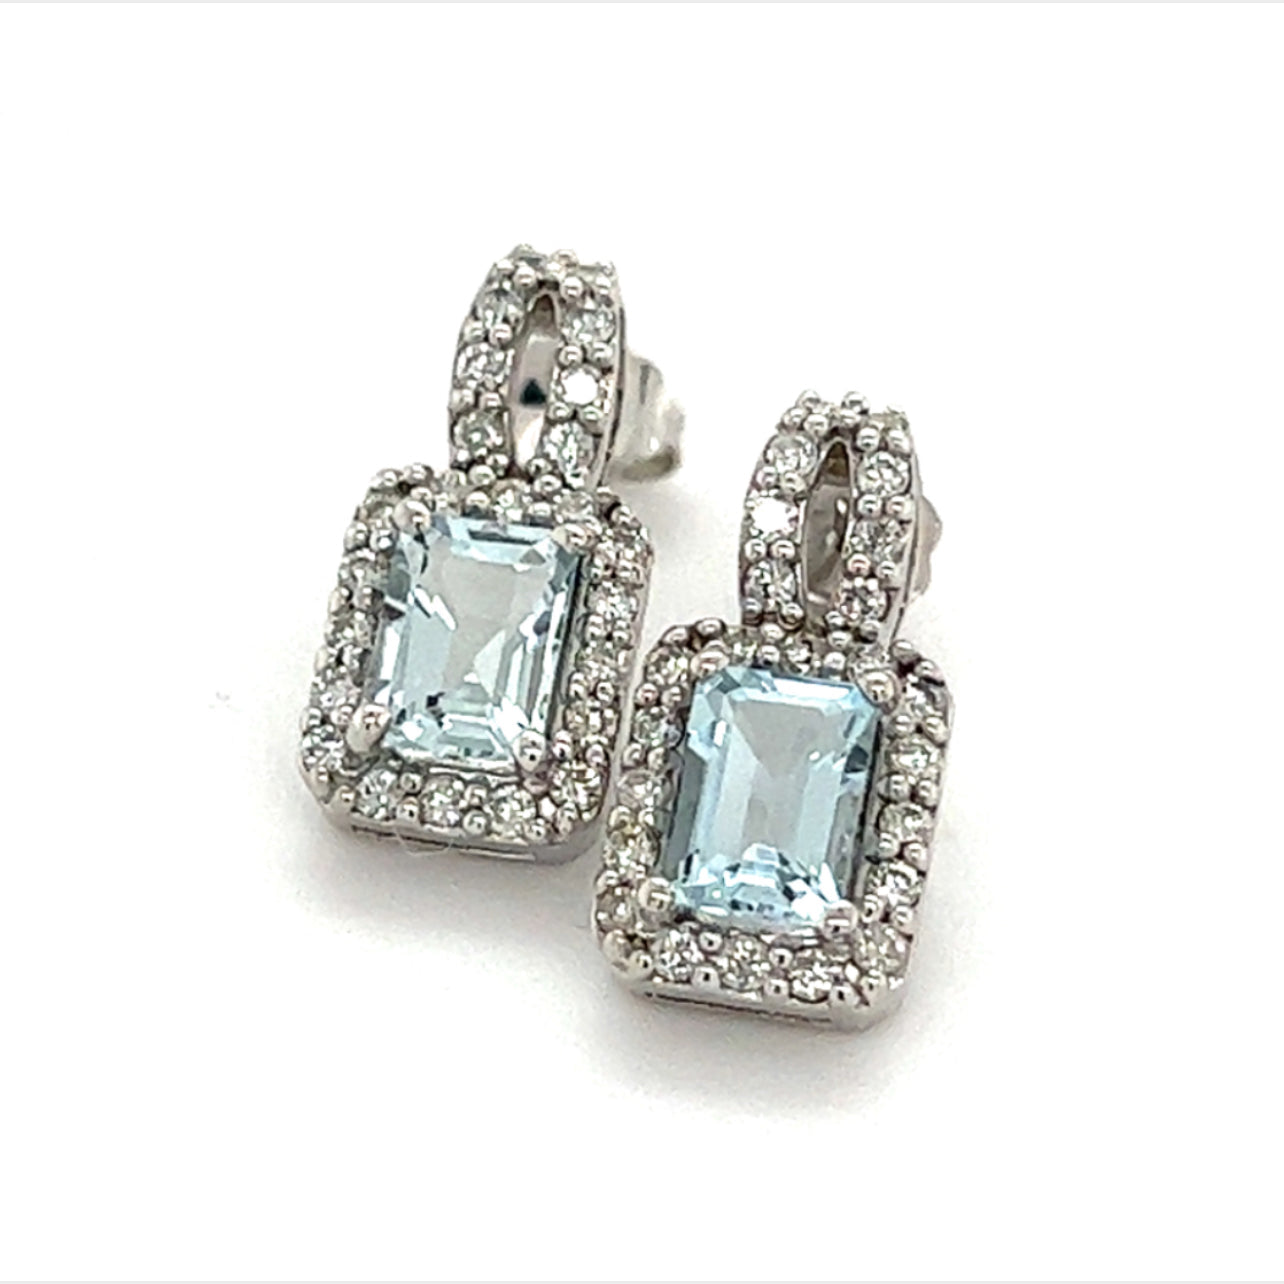 Natural Aquamarine Diamond Earrings 14k Gold 2.38 TCW Certified $4,950 215092 - Certified Fine Jewelry